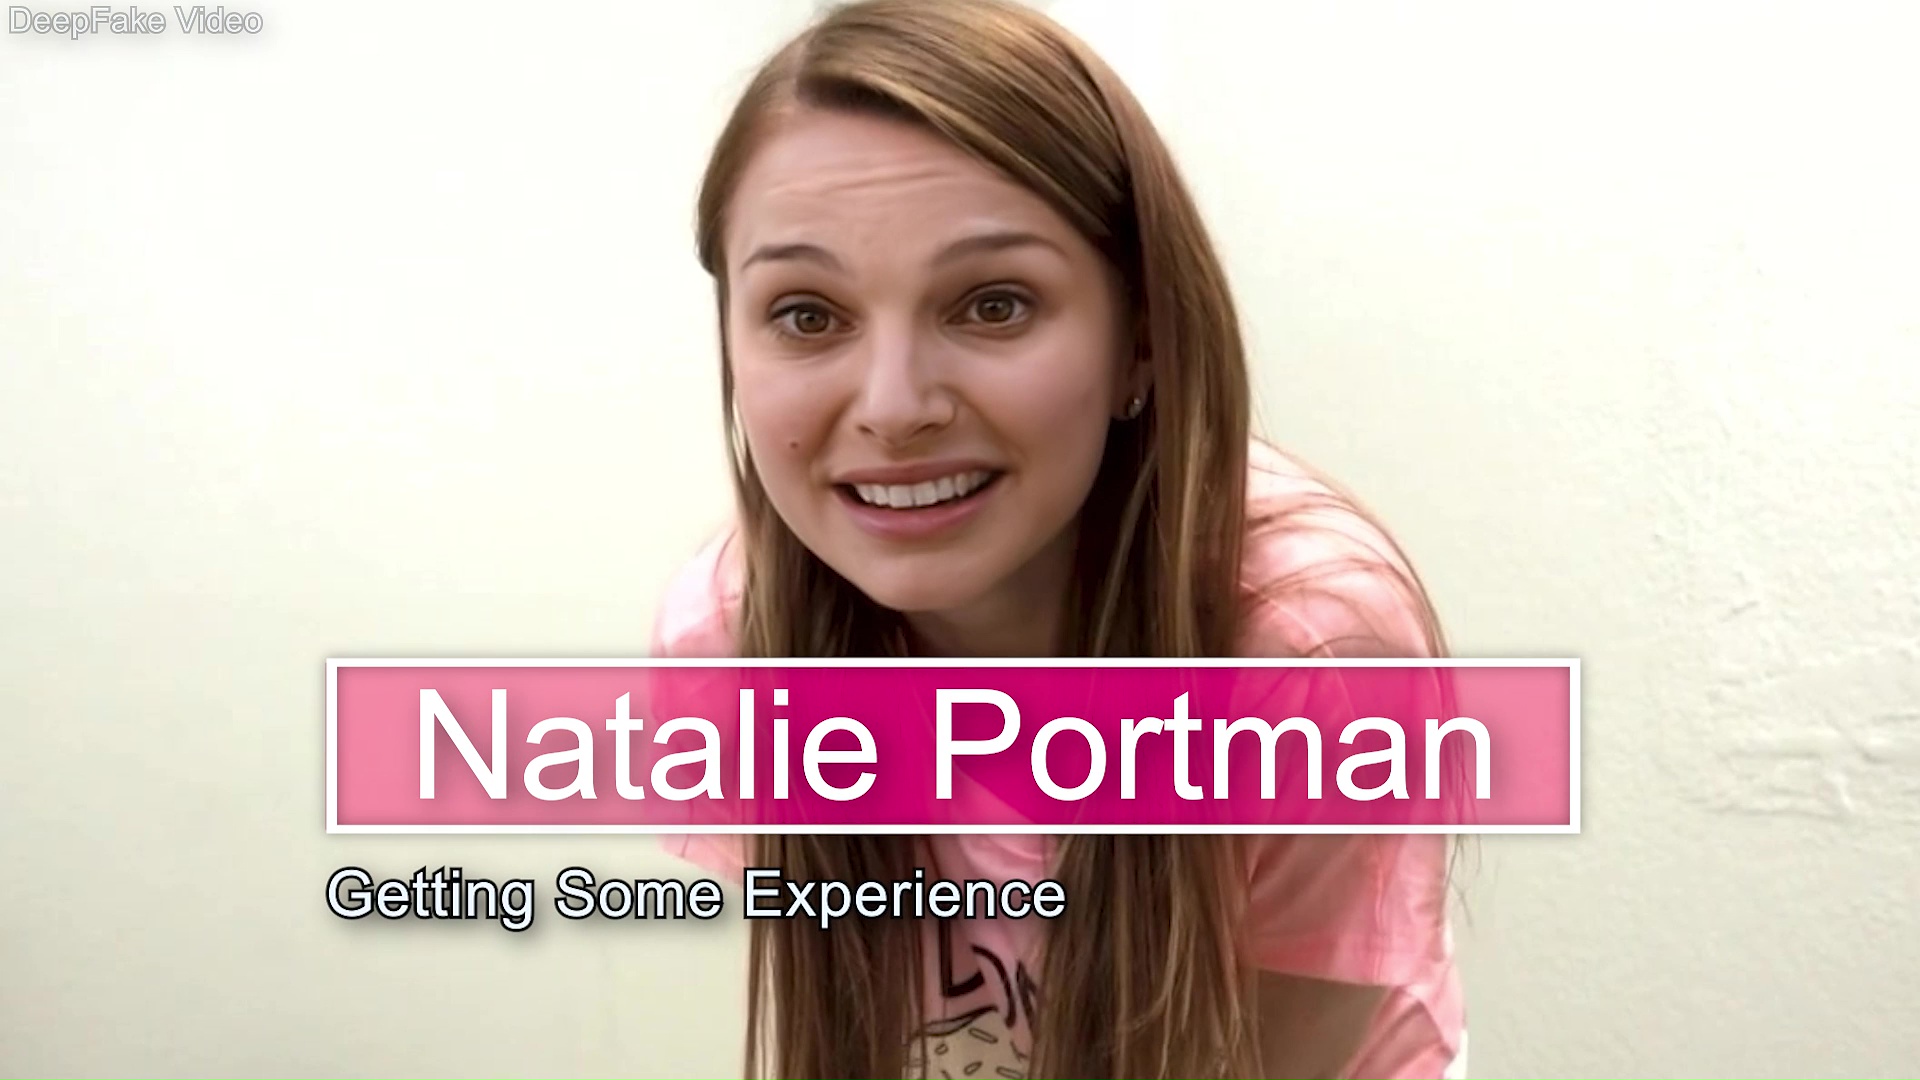 Natalie Portman - Getting Some Experience Pt 1 - Trailer